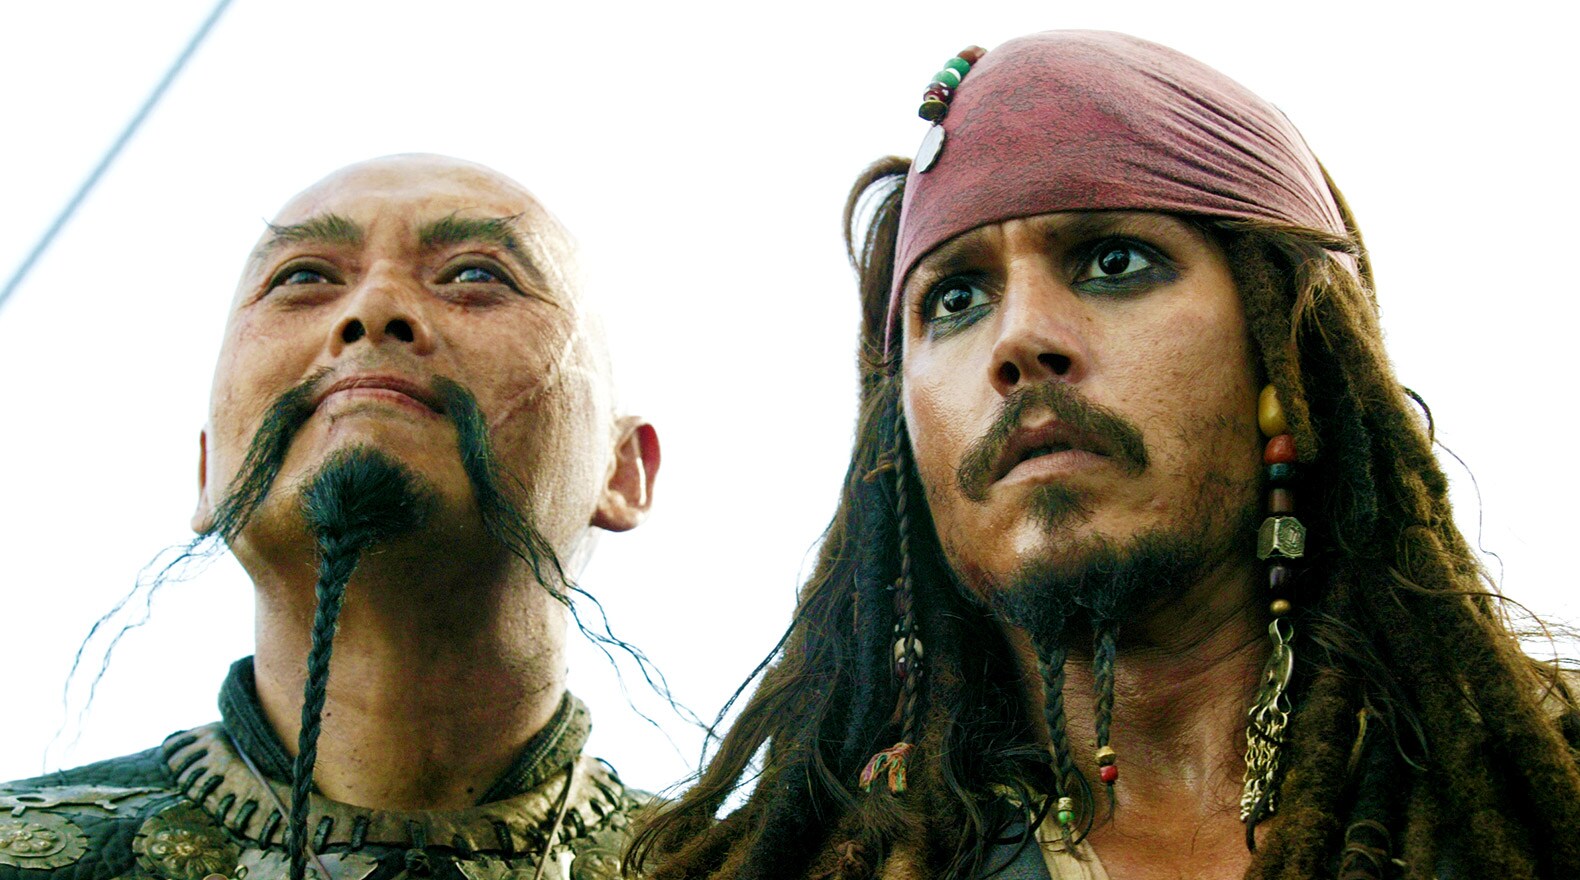 Captain Jack Sparrow by ktalbot on DeviantArt